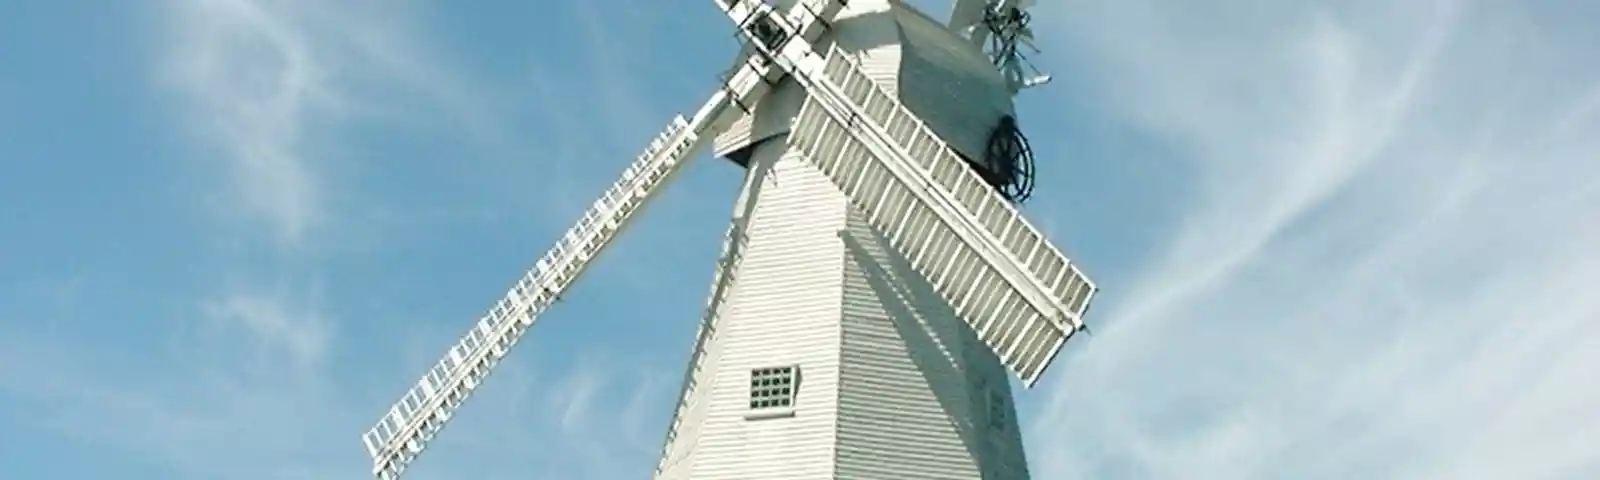 cranbrook-union-windmill.jpg